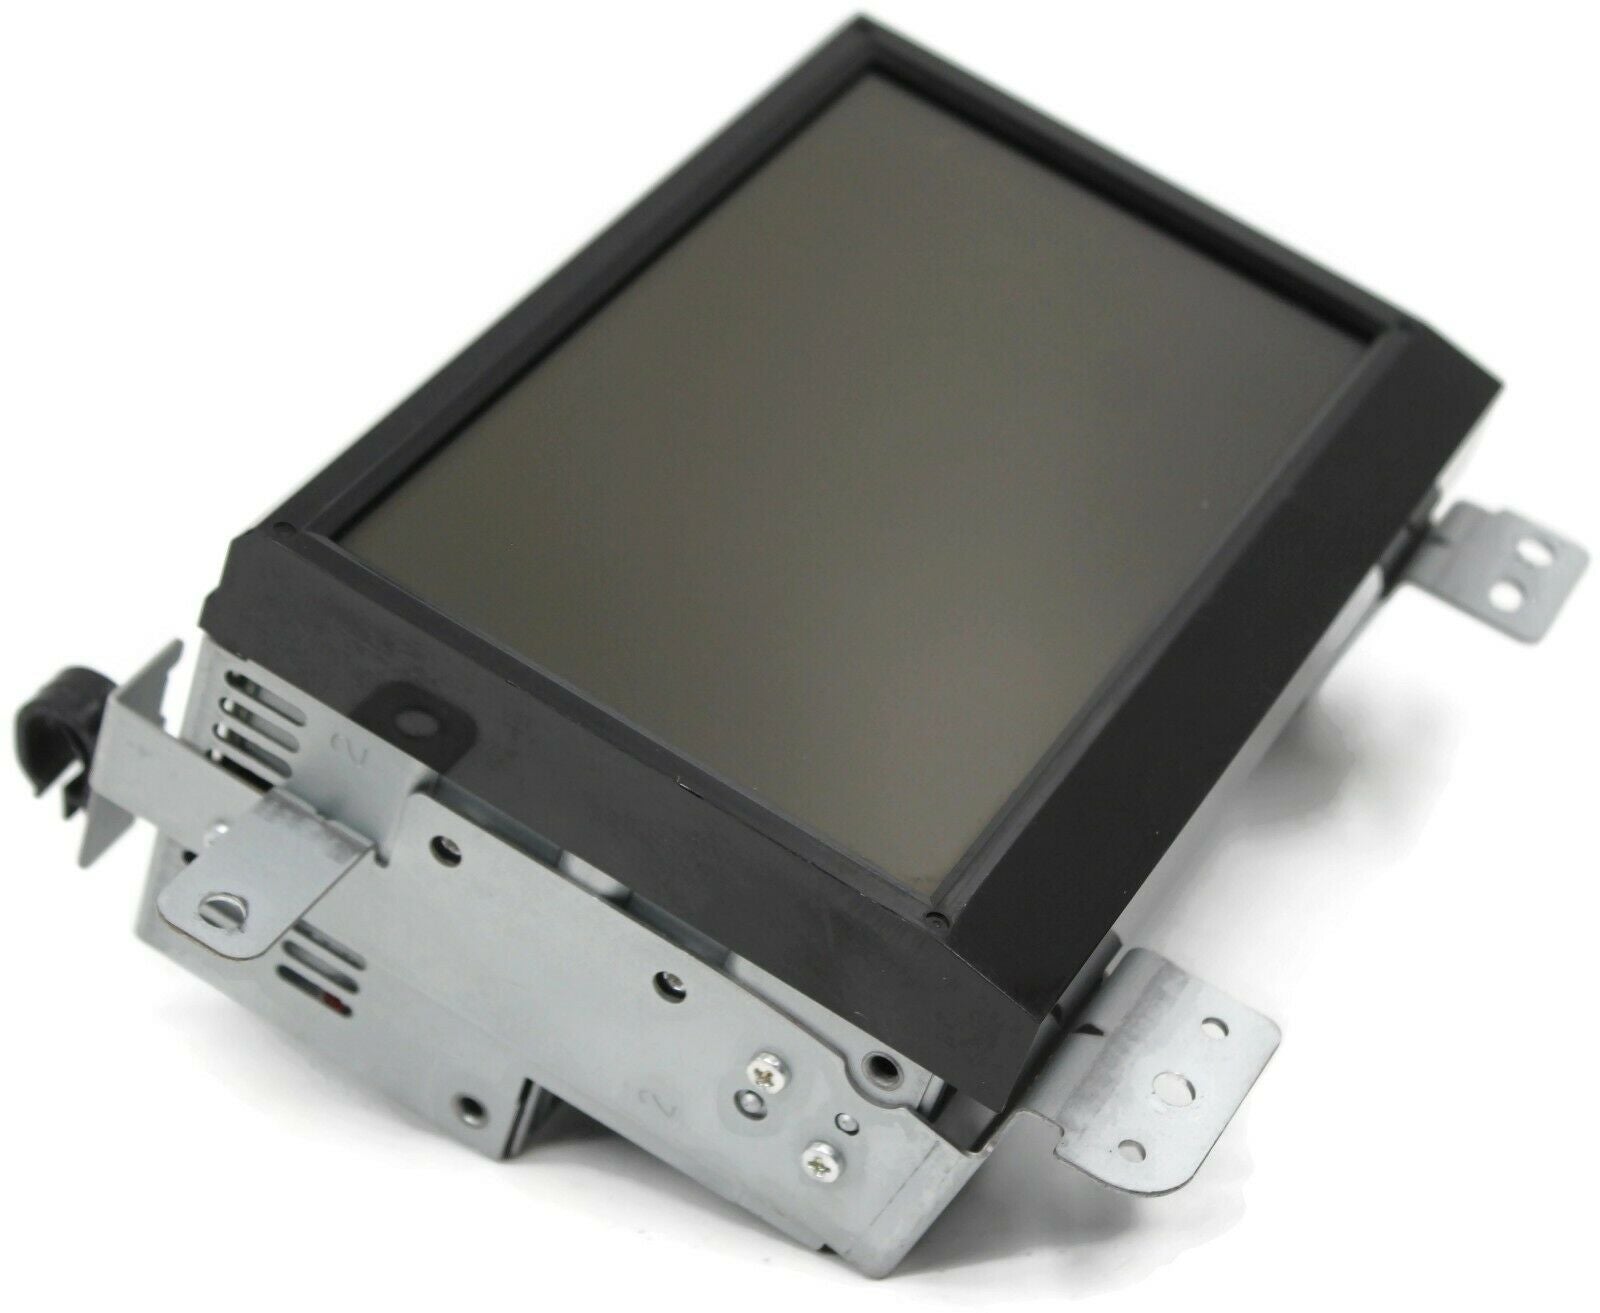 2006 Subaru B6 Tribeca Navigation Display LCD Screen